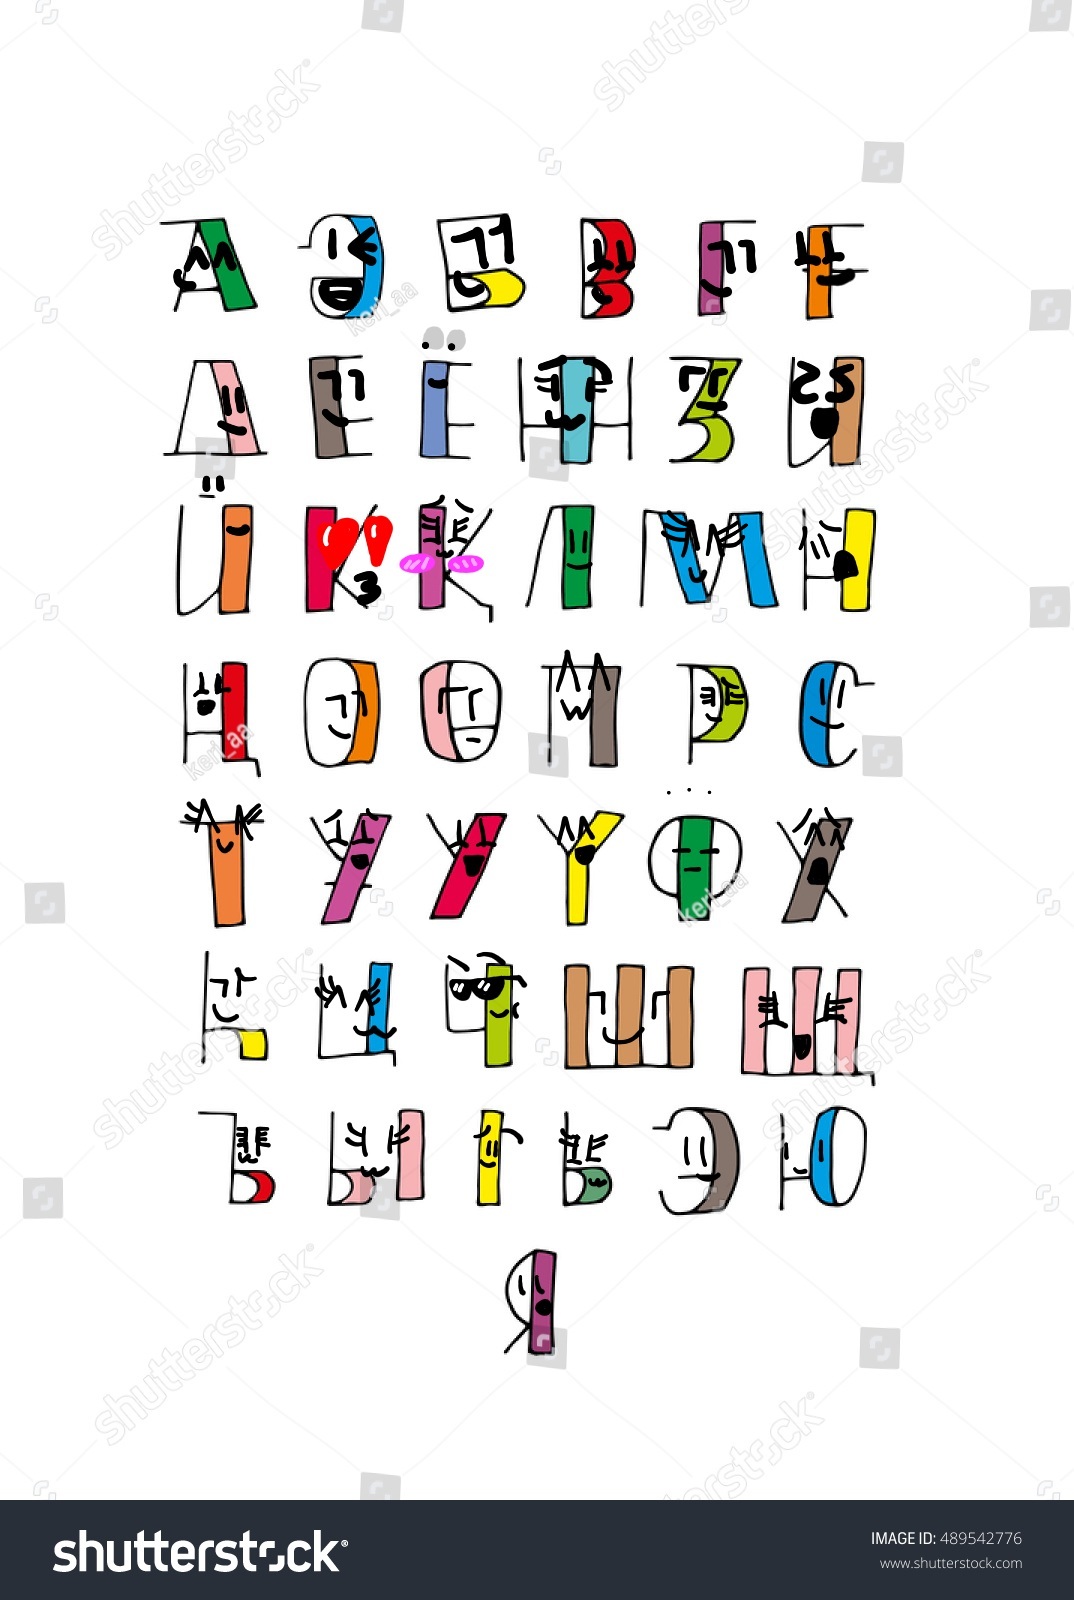 this is the Kazakhstan alphabet lore #kazakh #russianalphabetlore #kaz